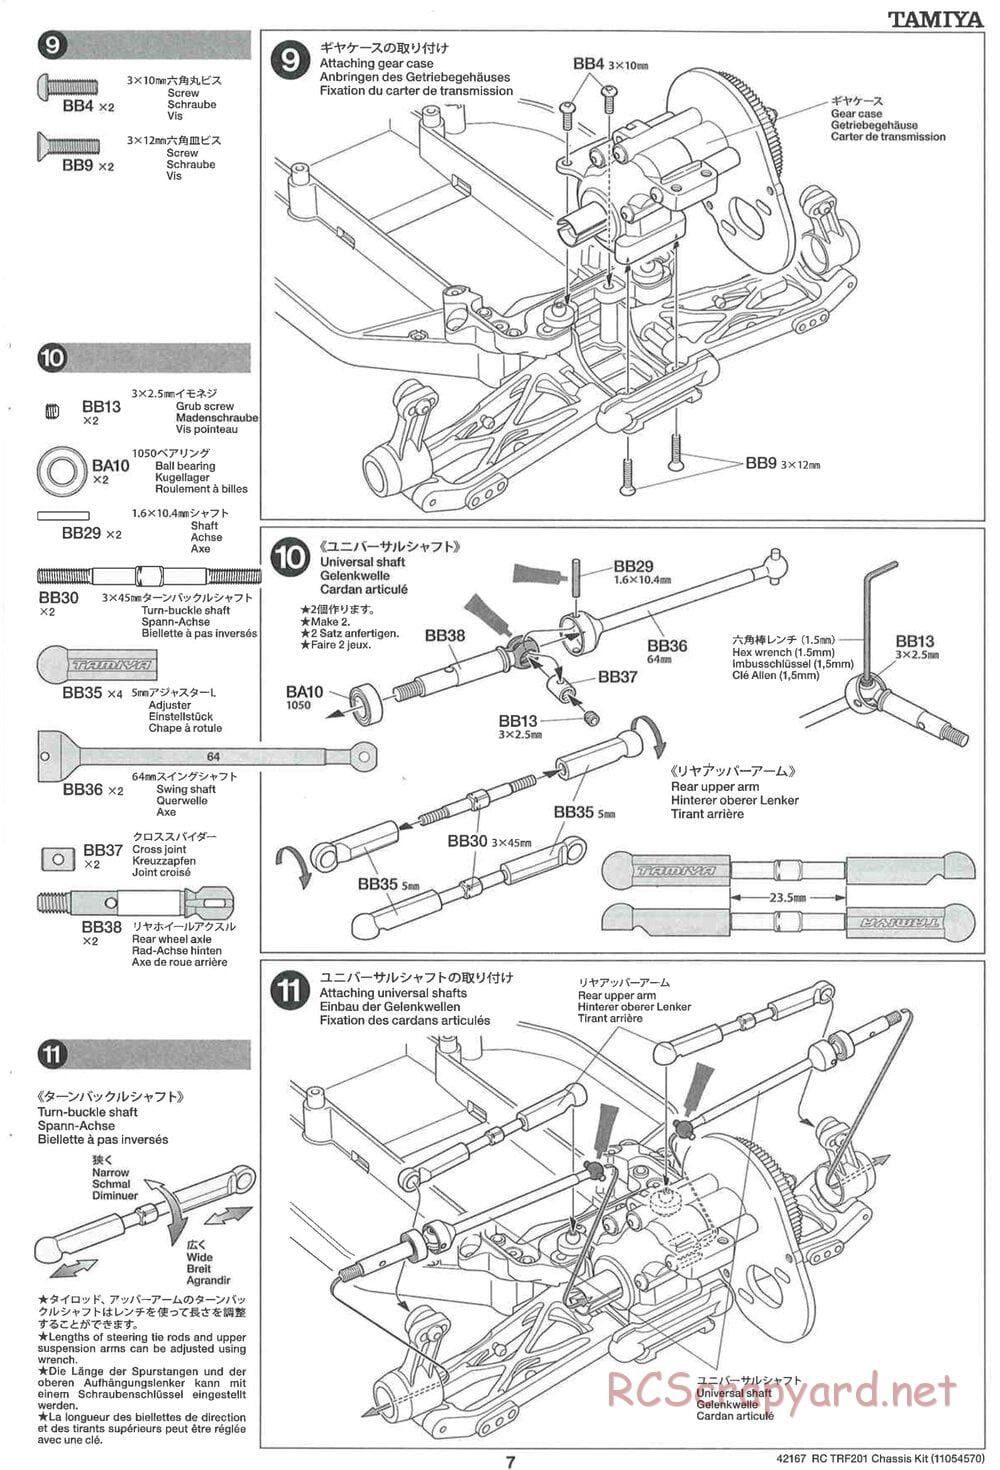 Tamiya - TRF201 Chassis - Manual - Page 7